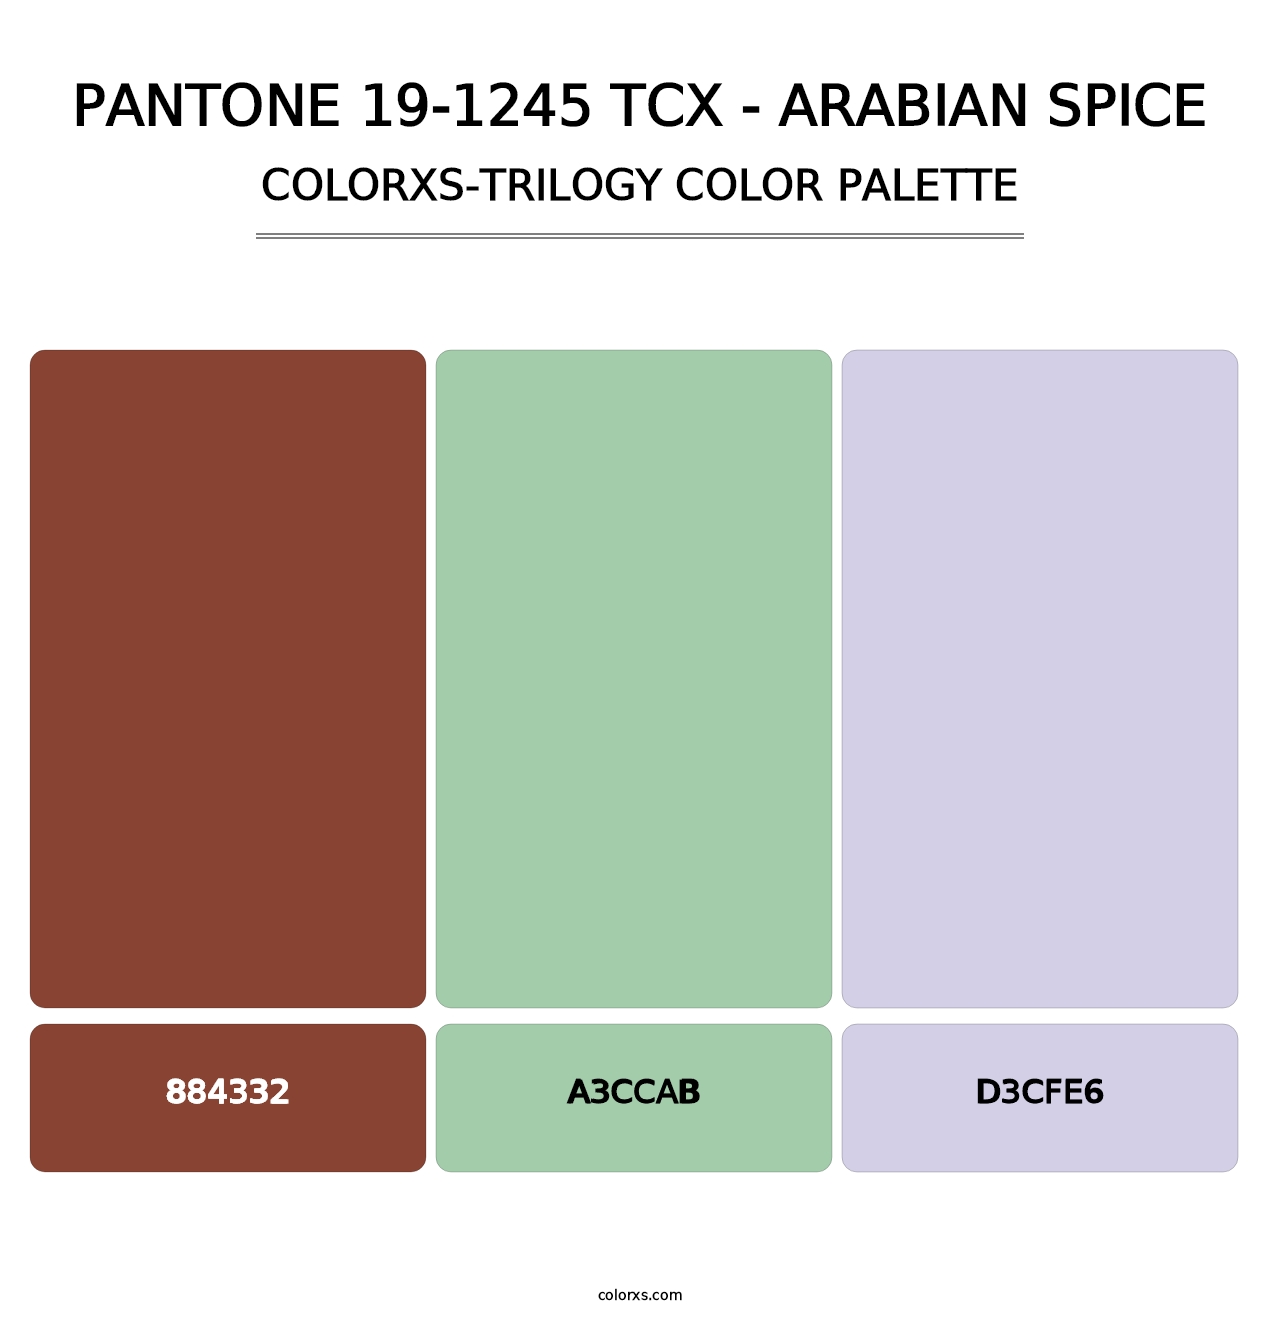 PANTONE 19-1245 TCX - Arabian Spice - Colorxs Trilogy Palette